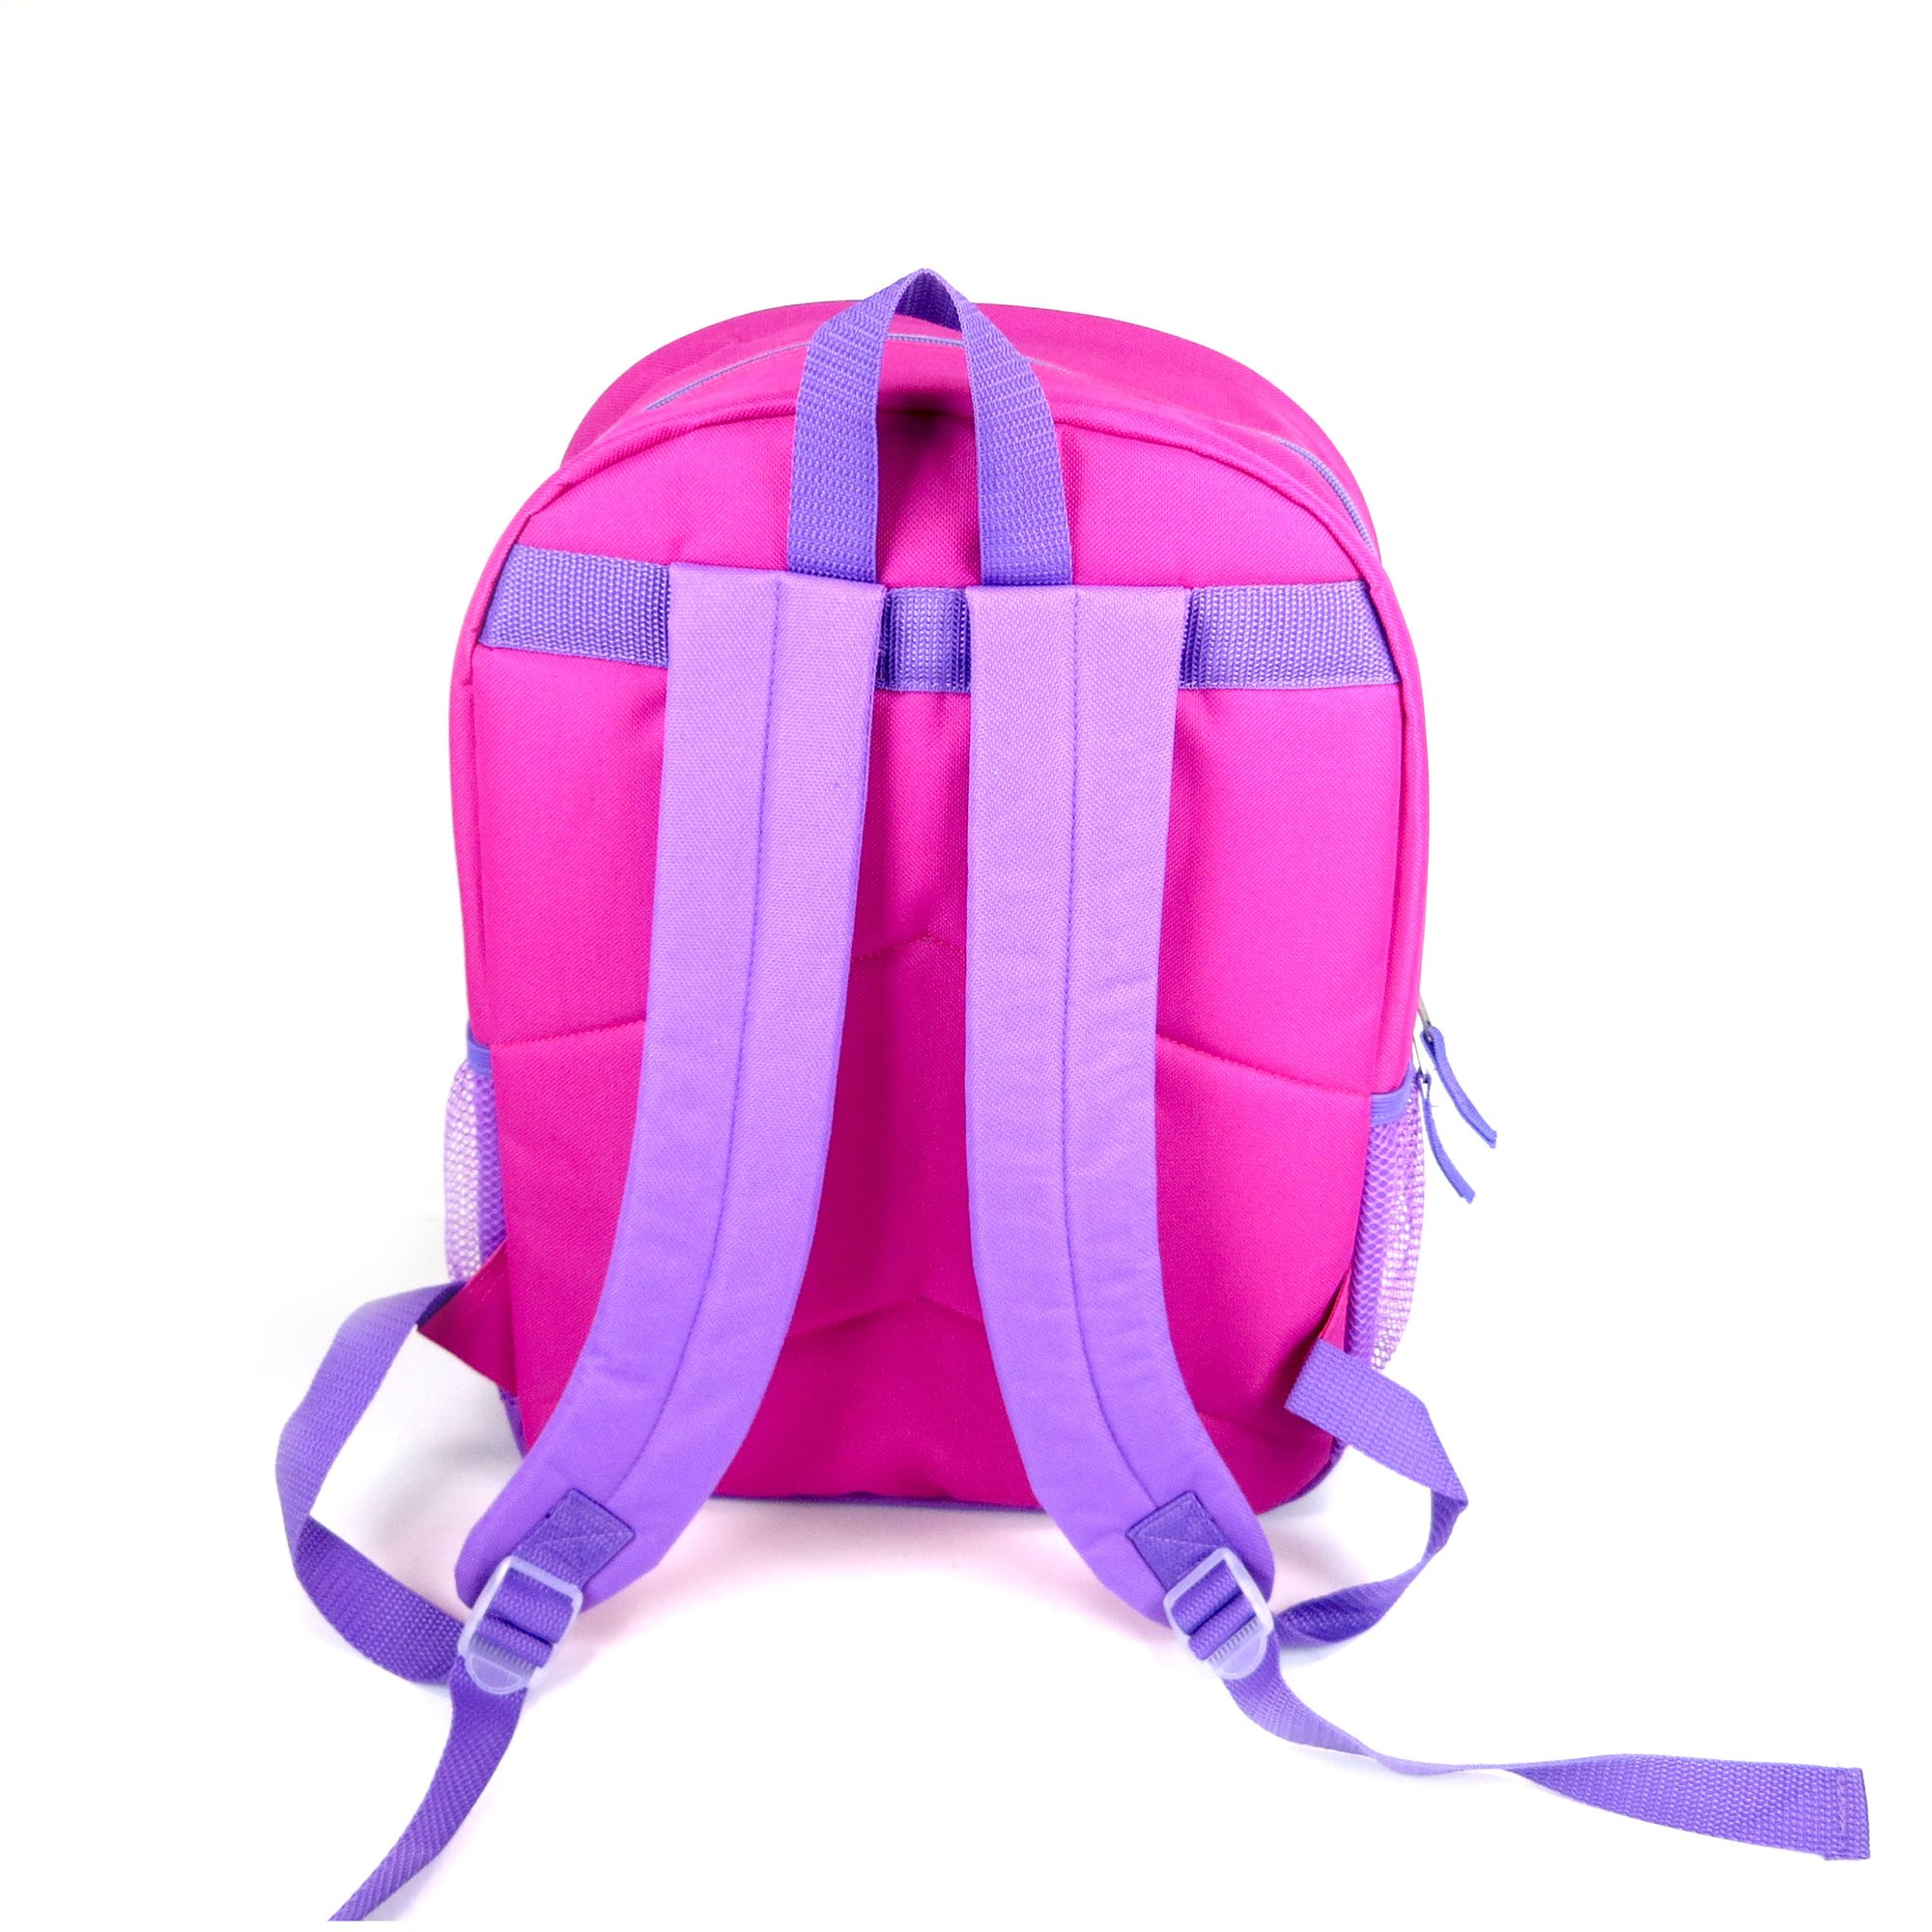 Disney Frozen Elsa Anna Olaf Girls' Purple Pink Backpack - image 3 of 3